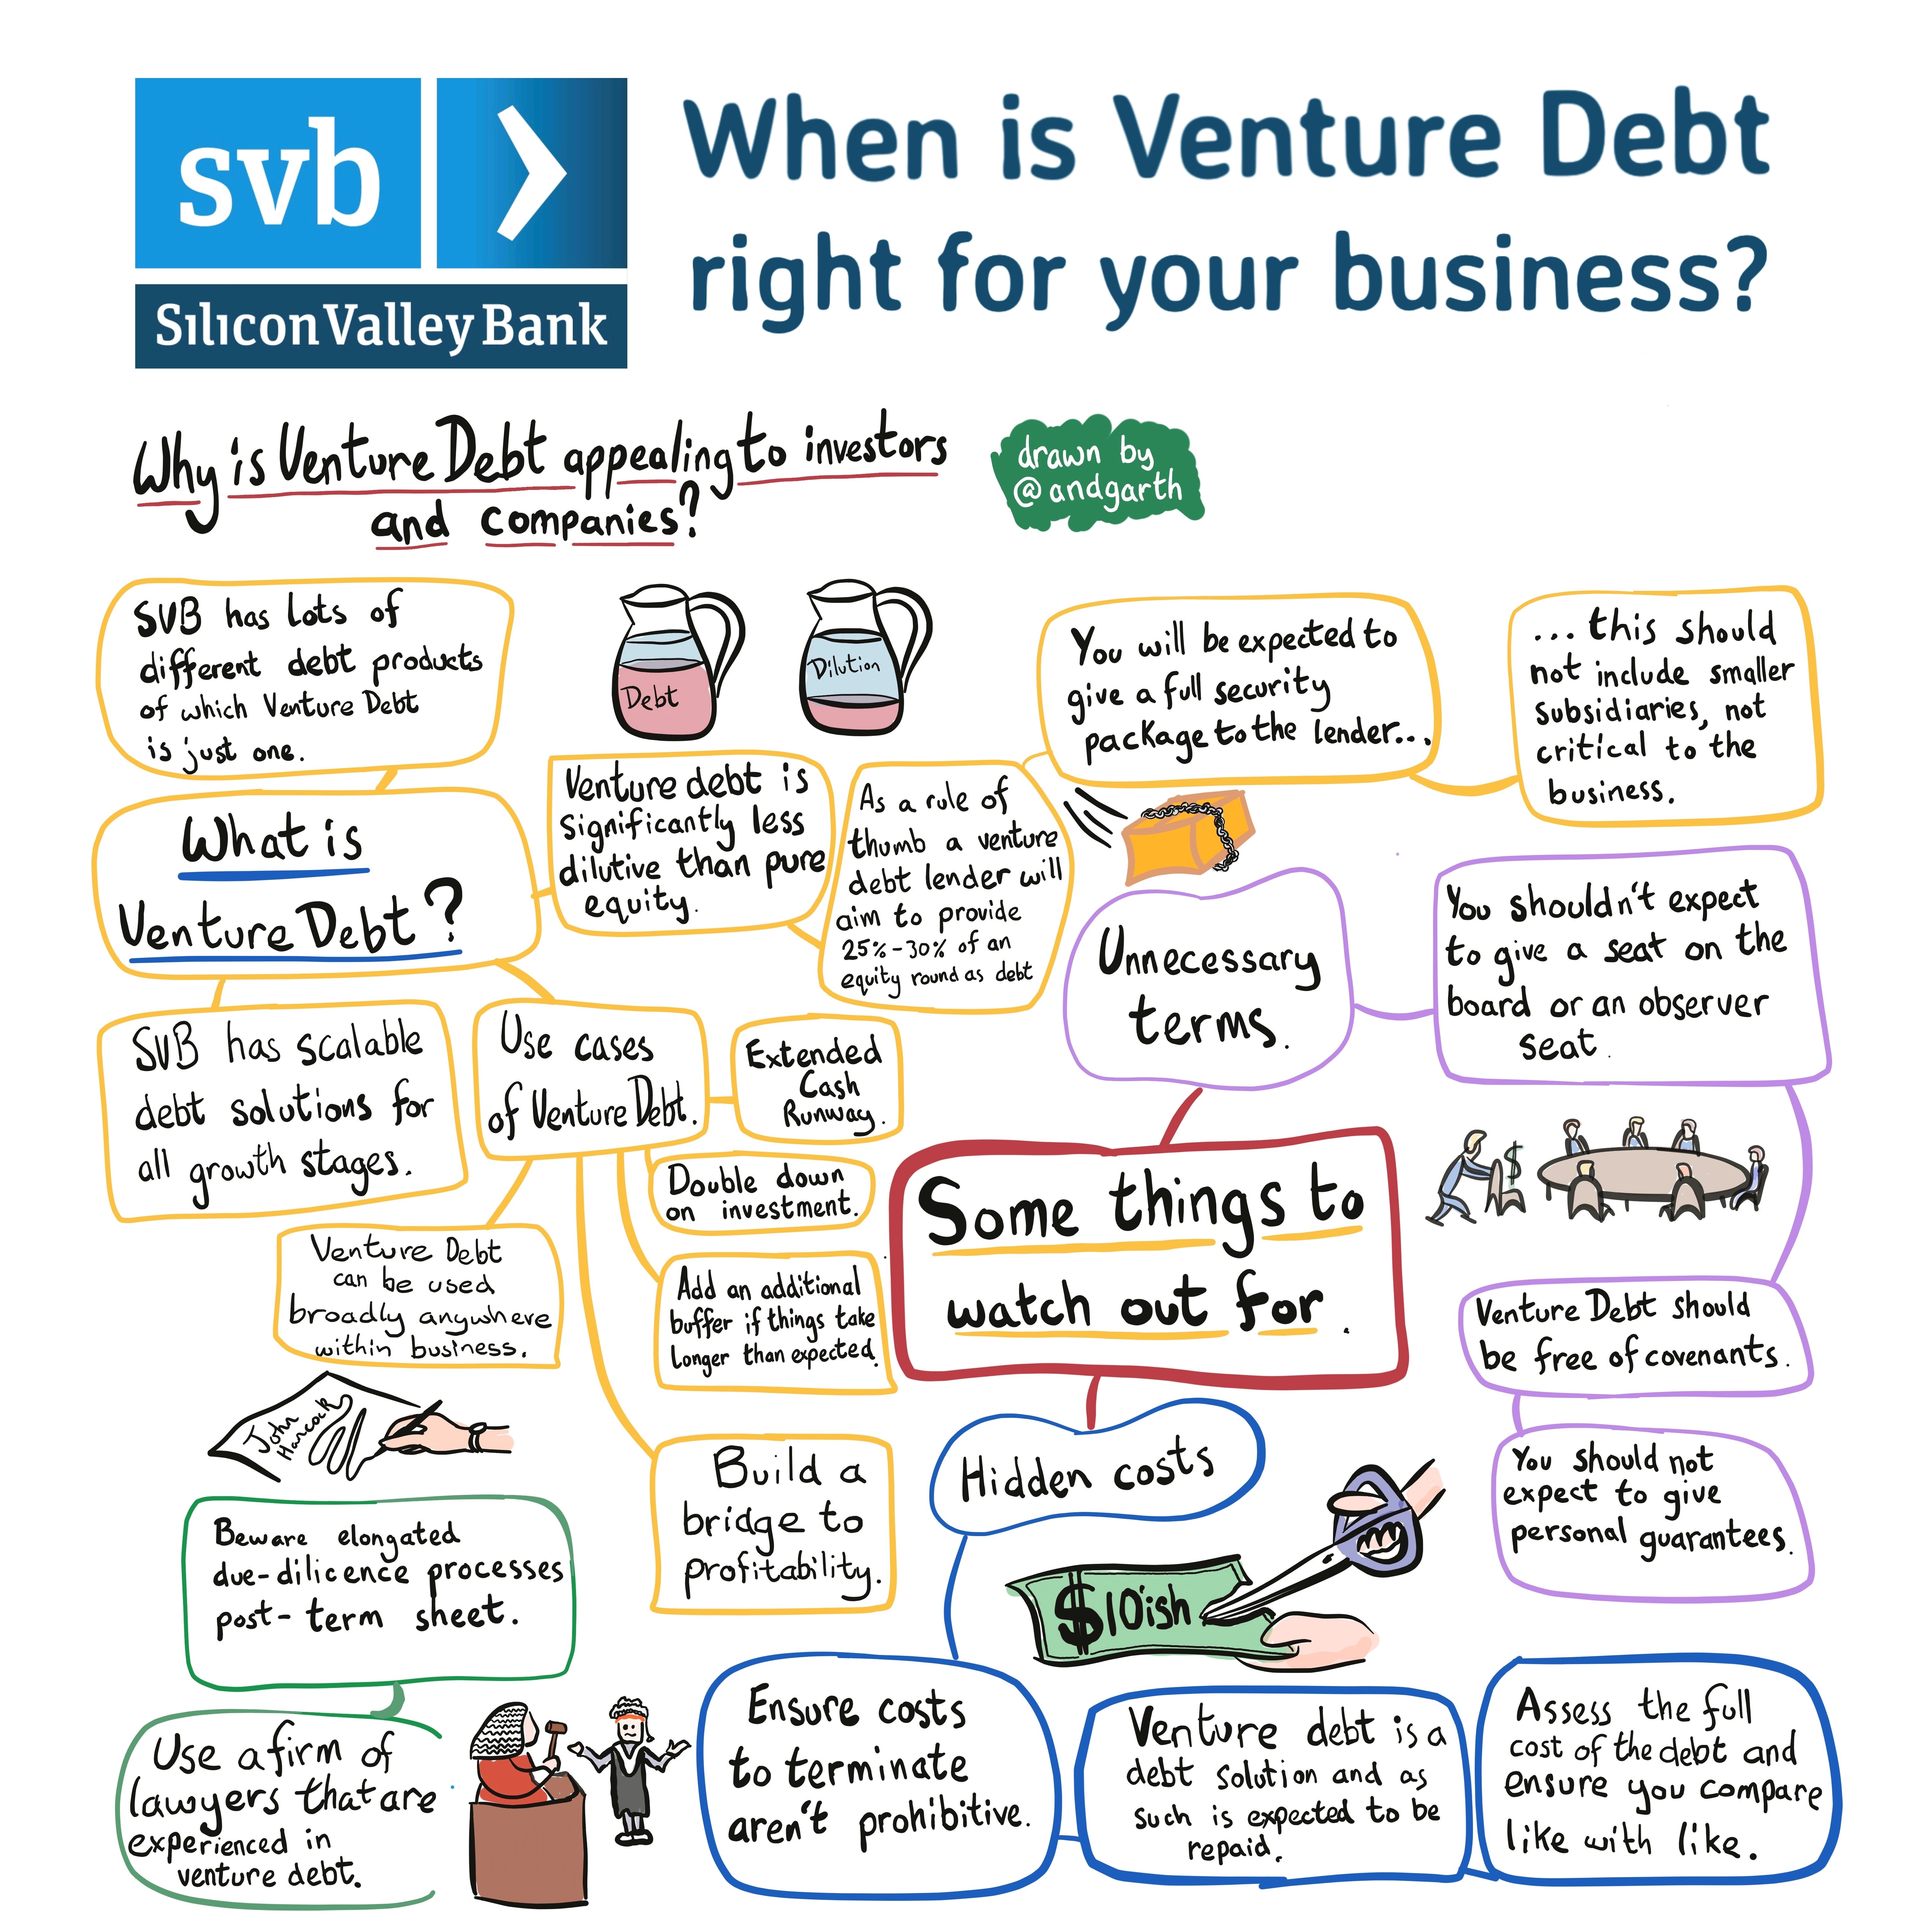 Does venture debt require personal guarantees?